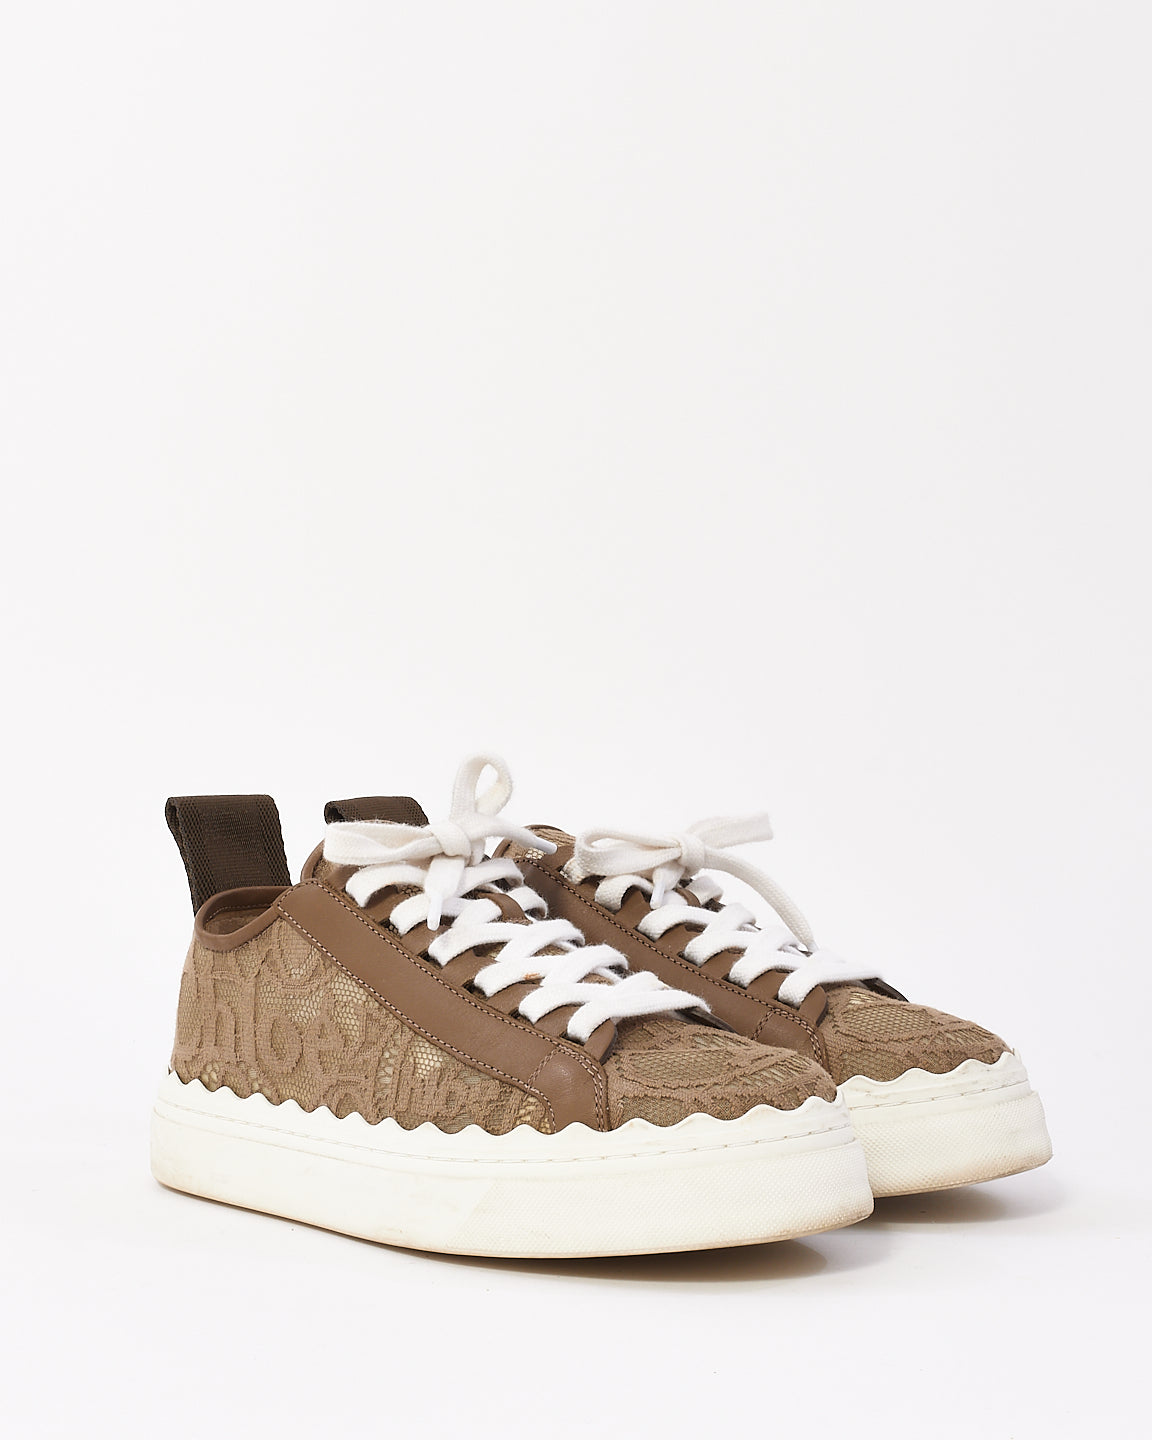 Chloé Brown Leather Lauren Sneakers - 37